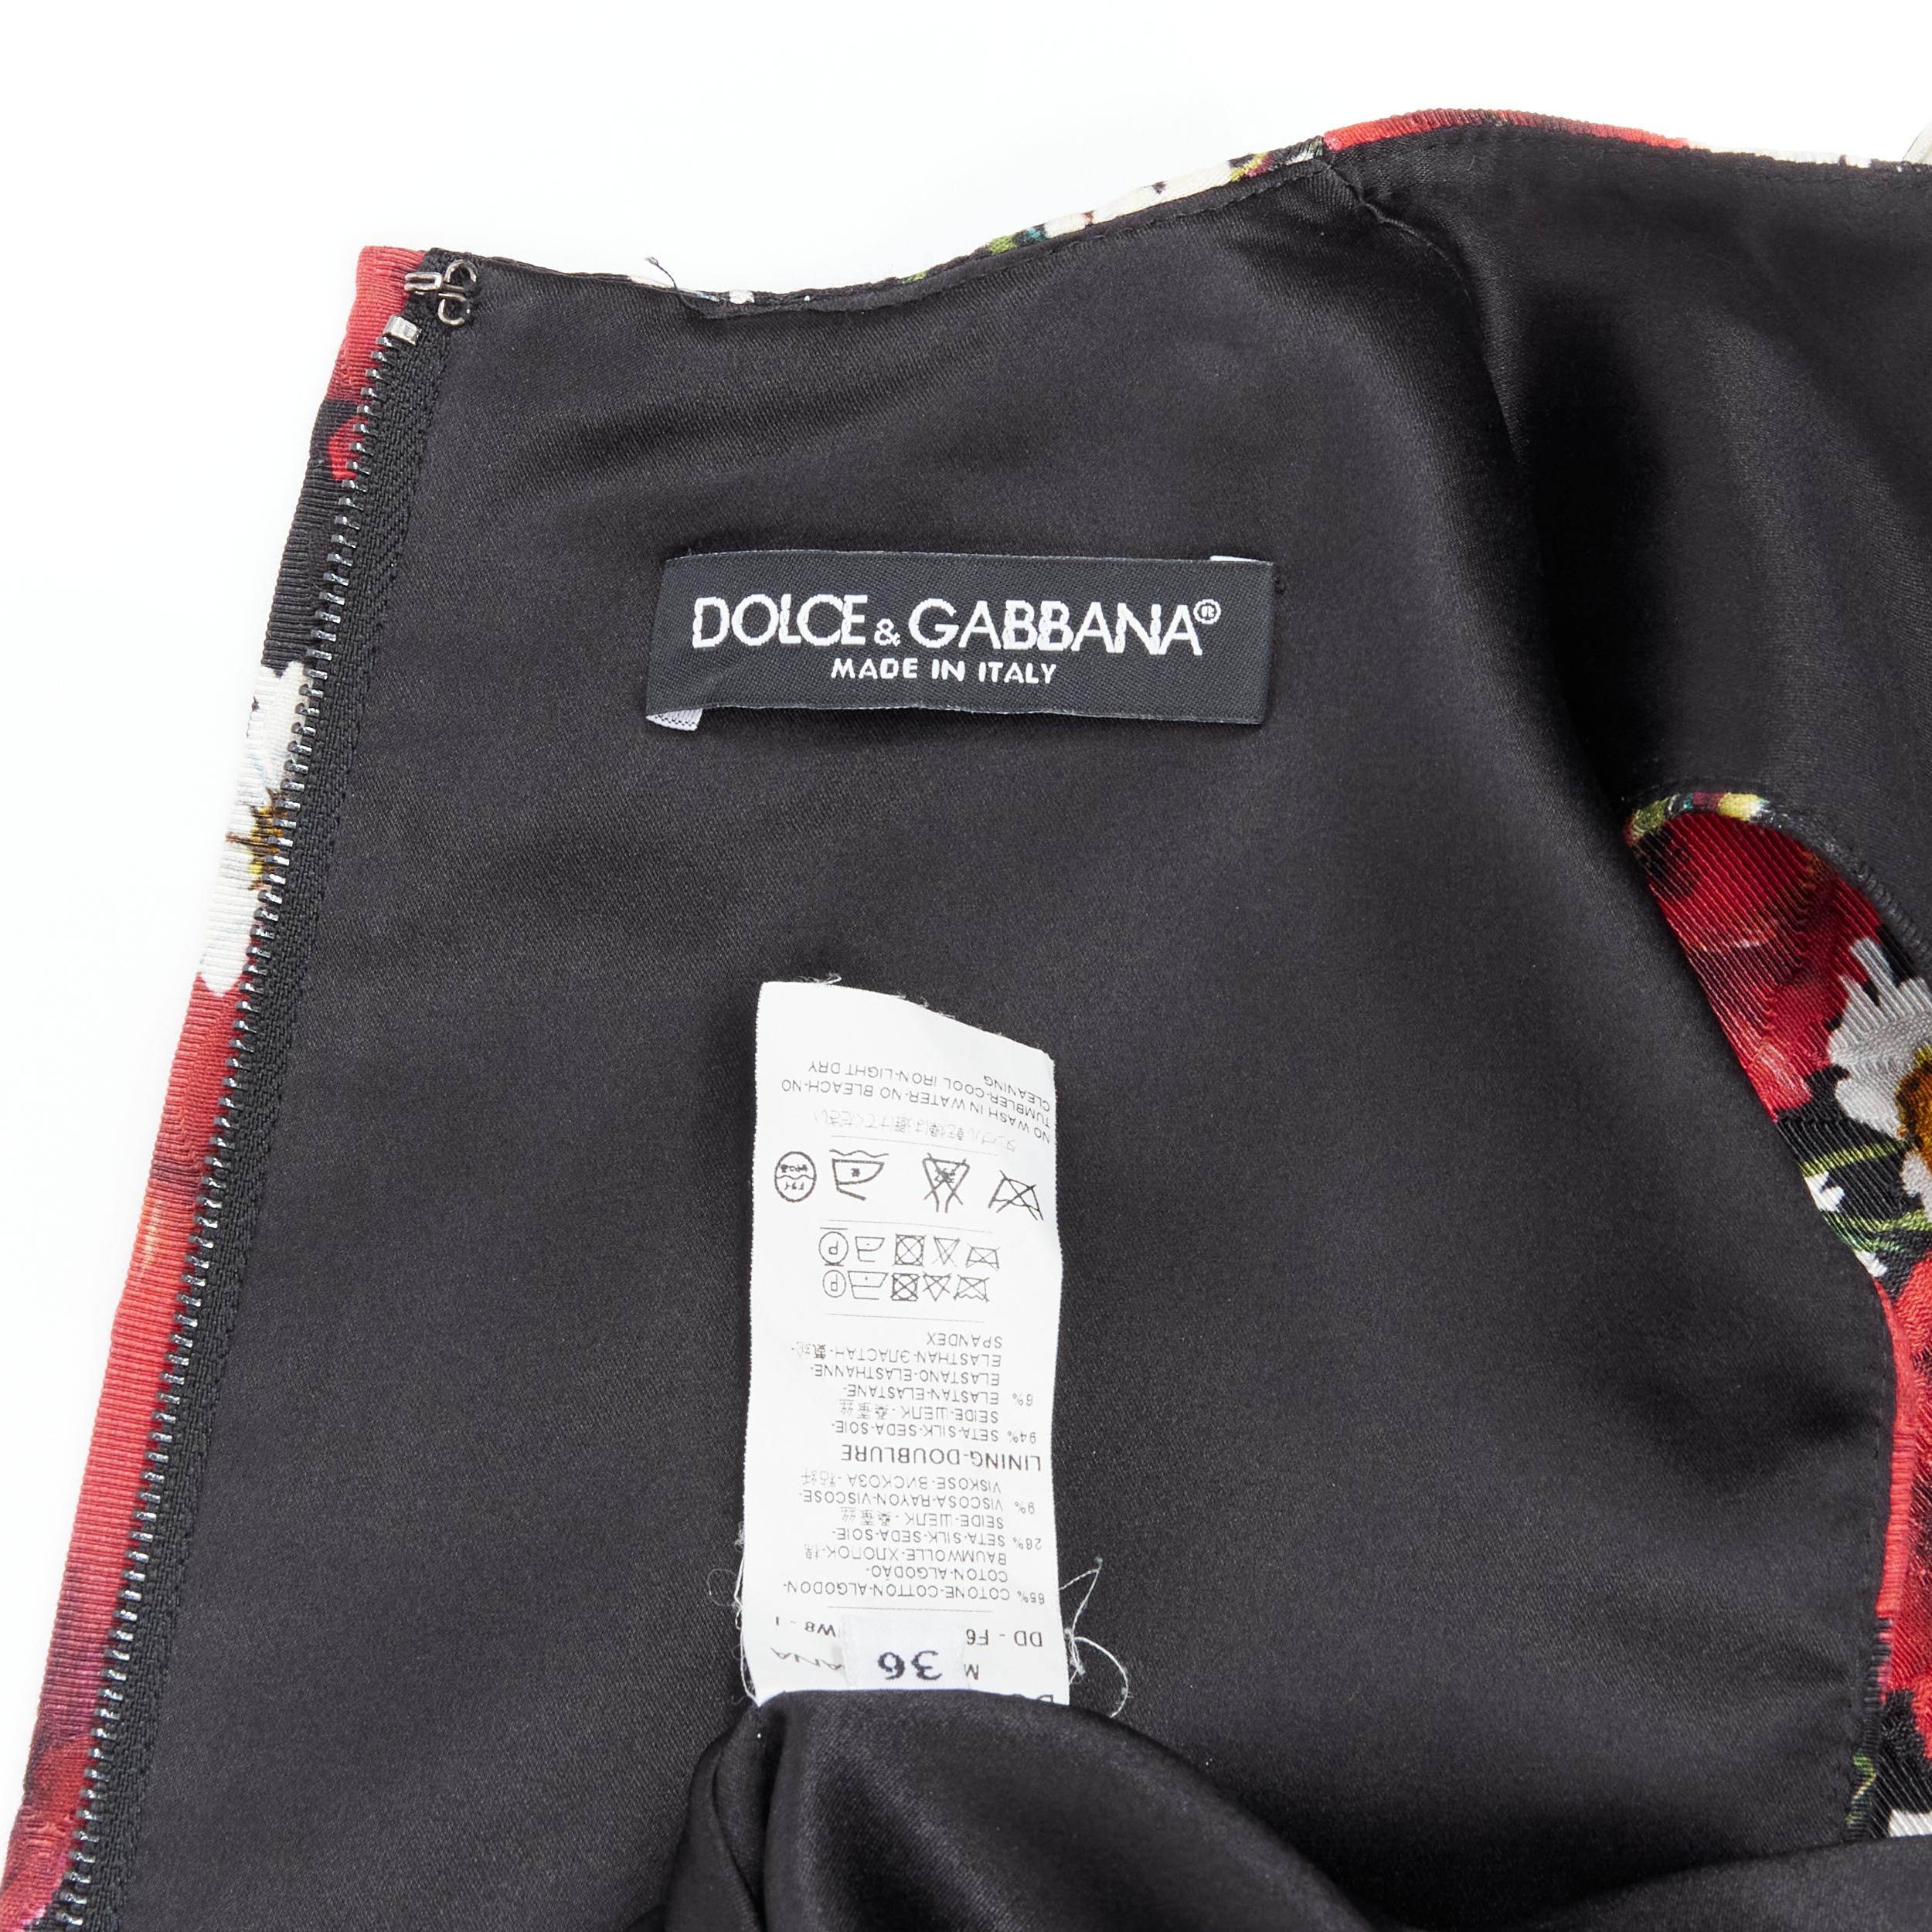 DOLCE GABBANA Poppy Daisy floral print jacquard mini sheath dress IT36 XS For Sale 3